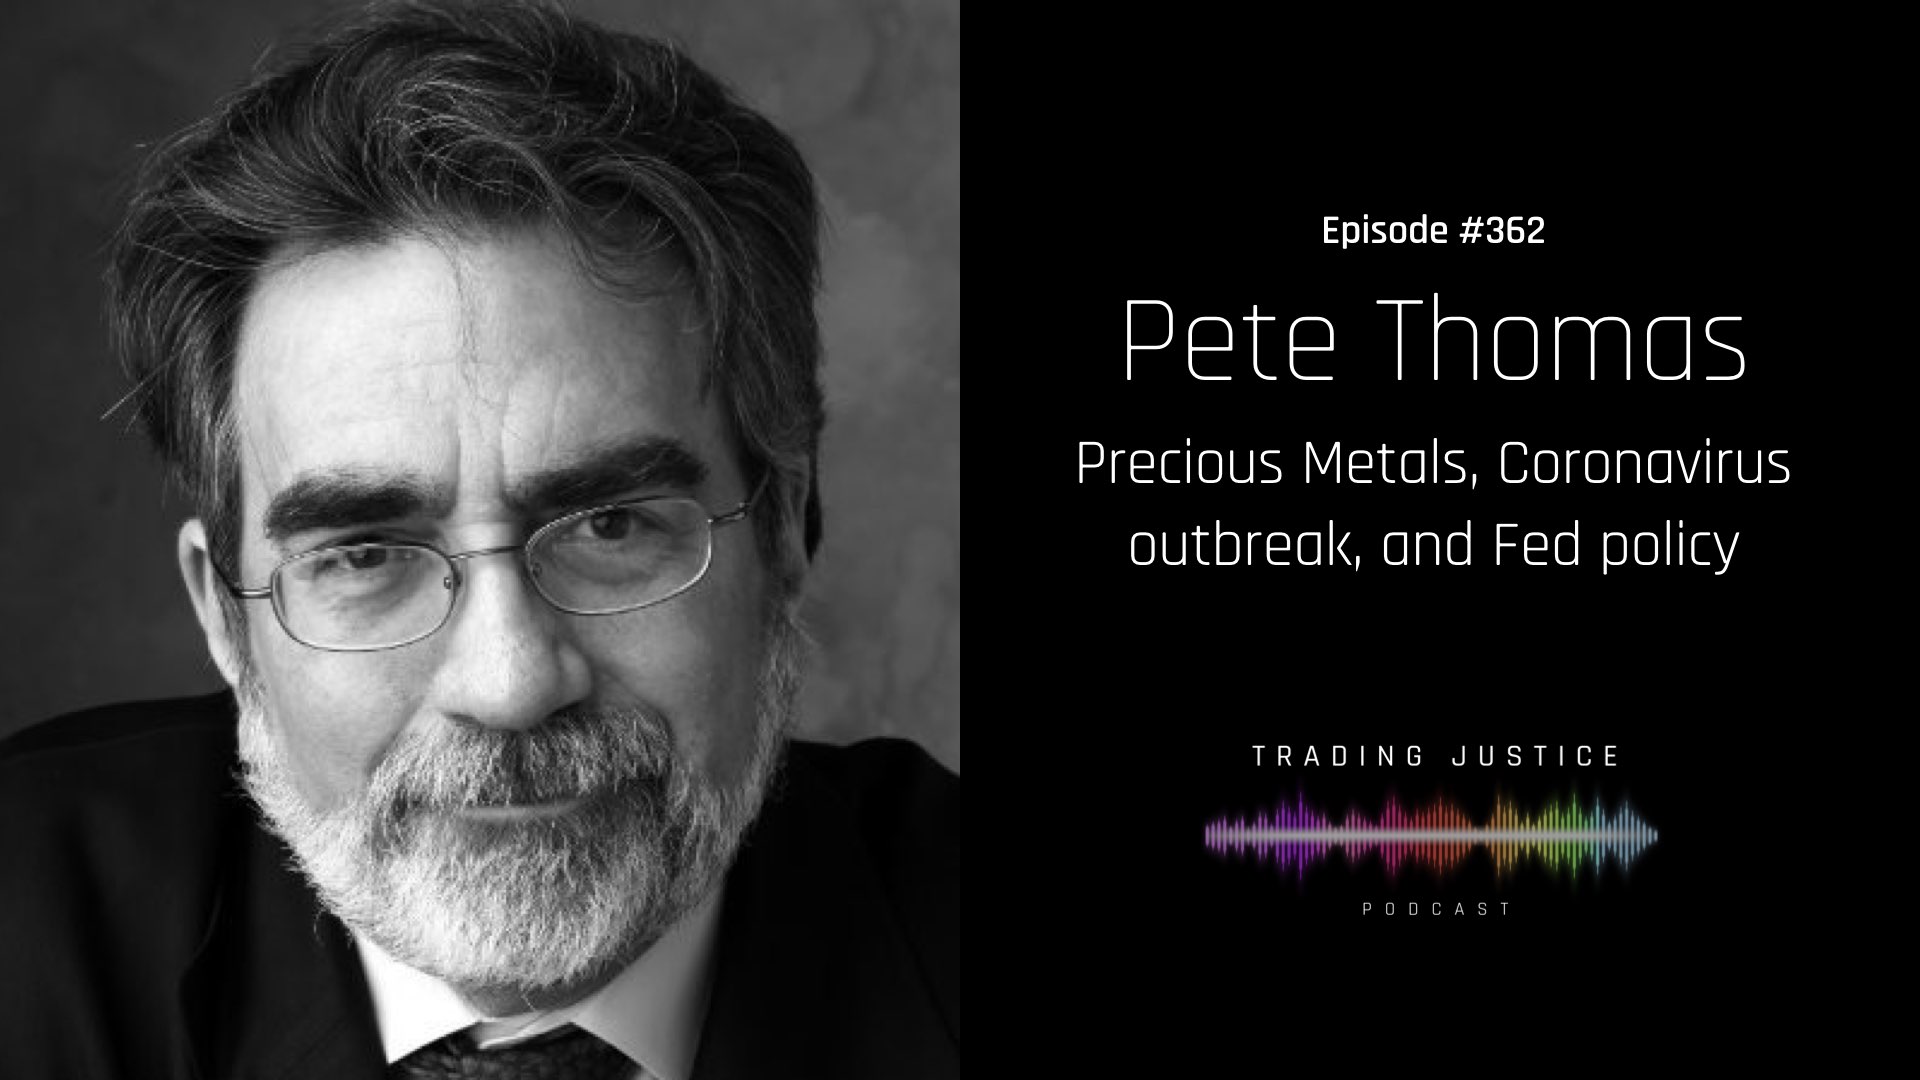 Episode 362: Pete Thomas on Precious Metals, Coronavirus outbreak, and Fed policy